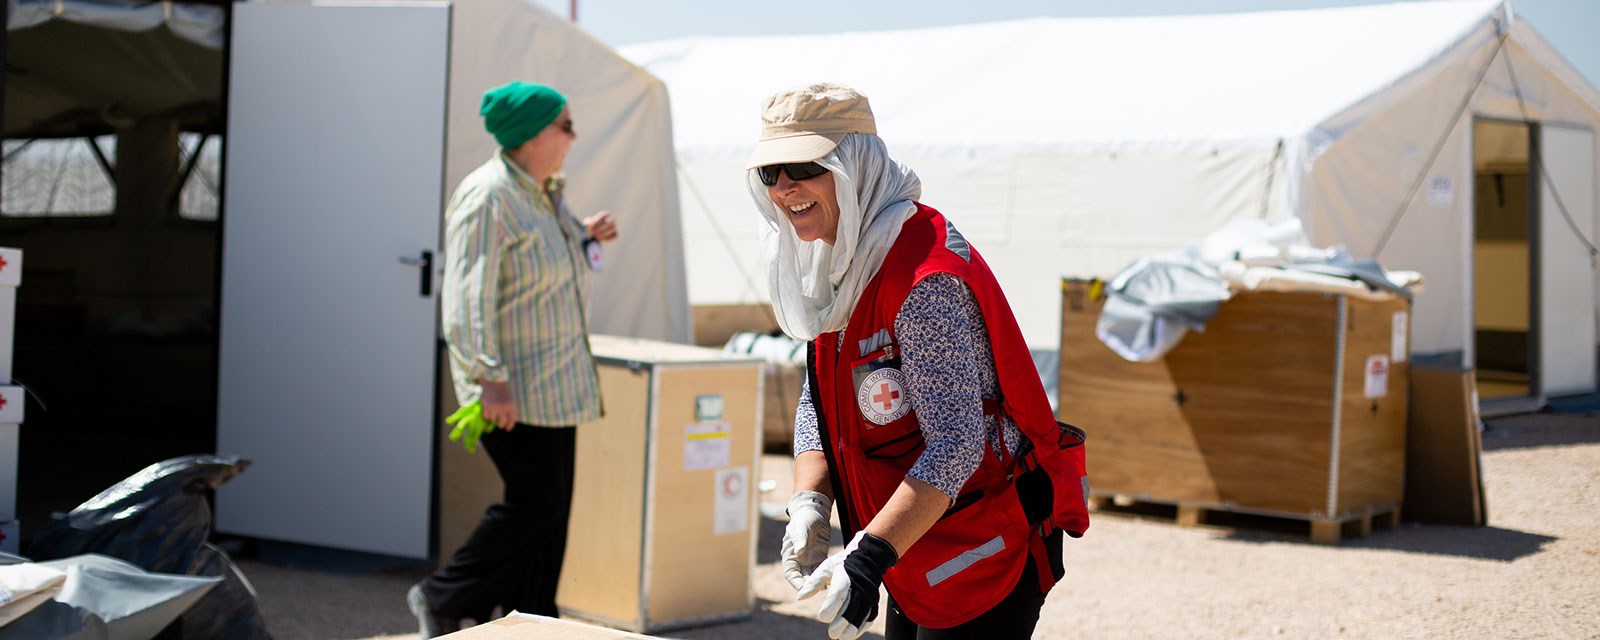 Female ICRC delegate working under burning sun preparing the newly arrived fieldhostpital